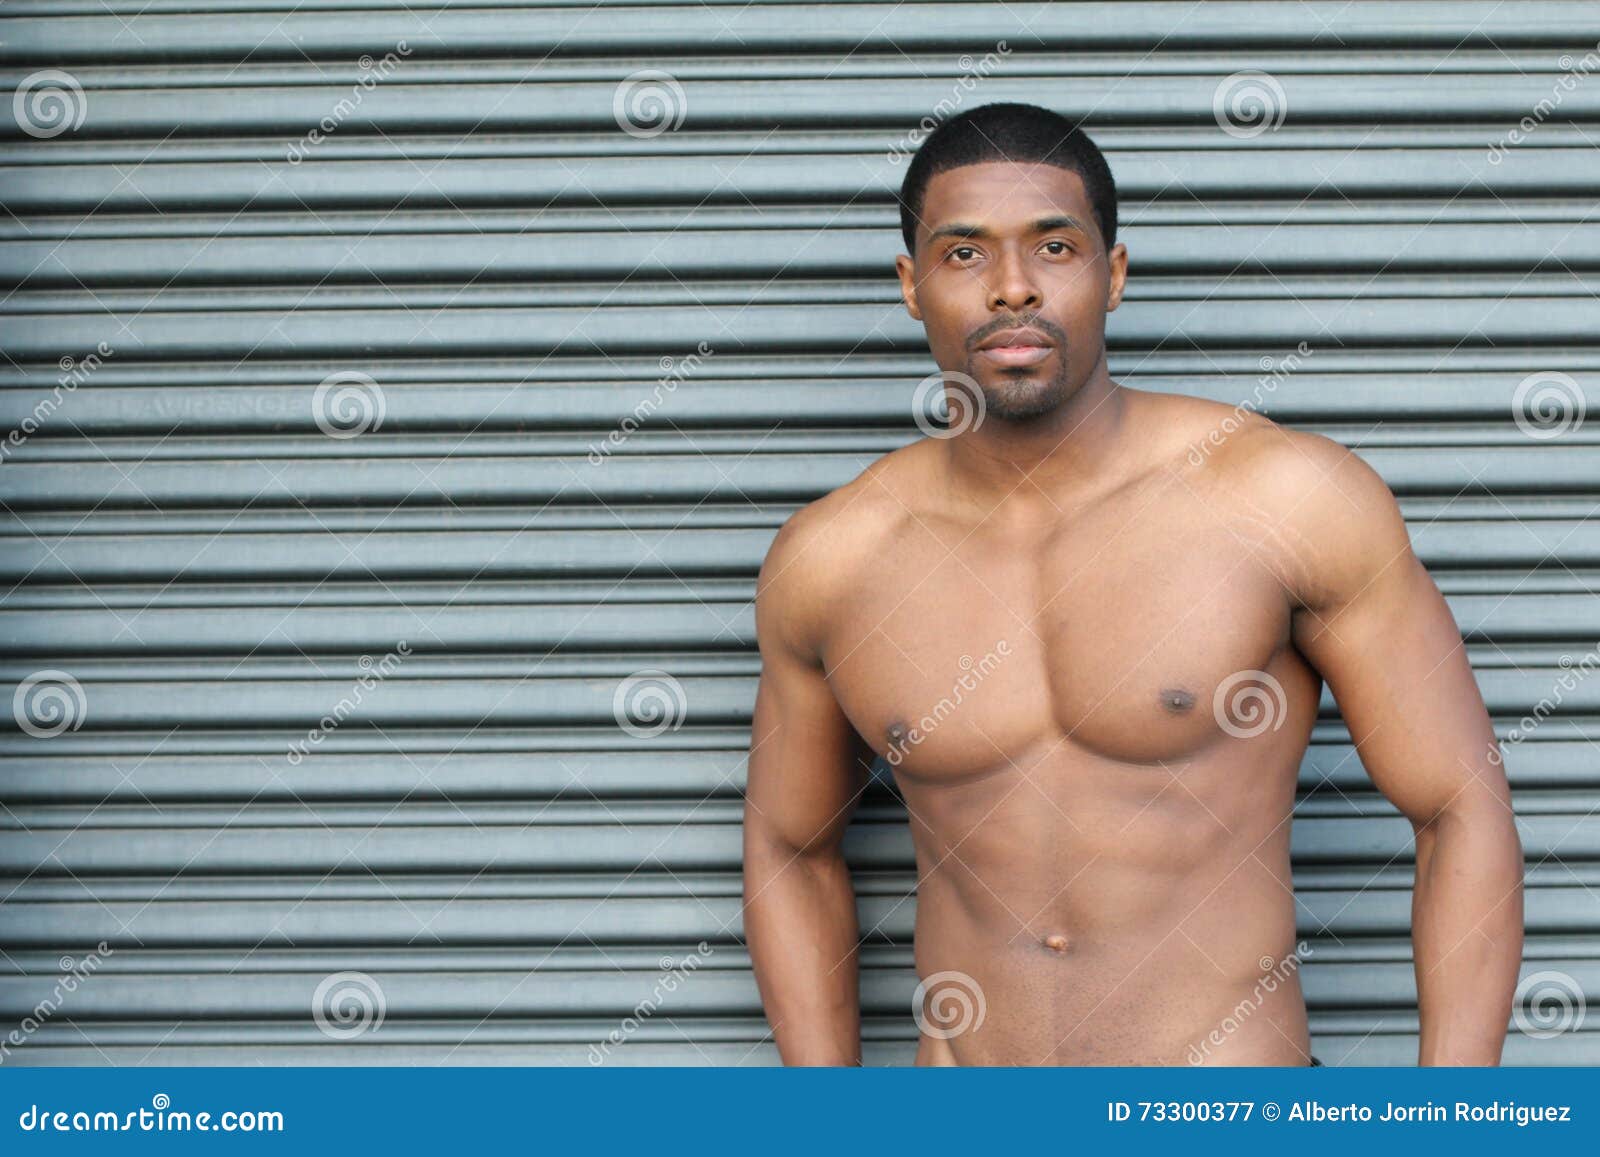 david eisinger add photo young naked black boys